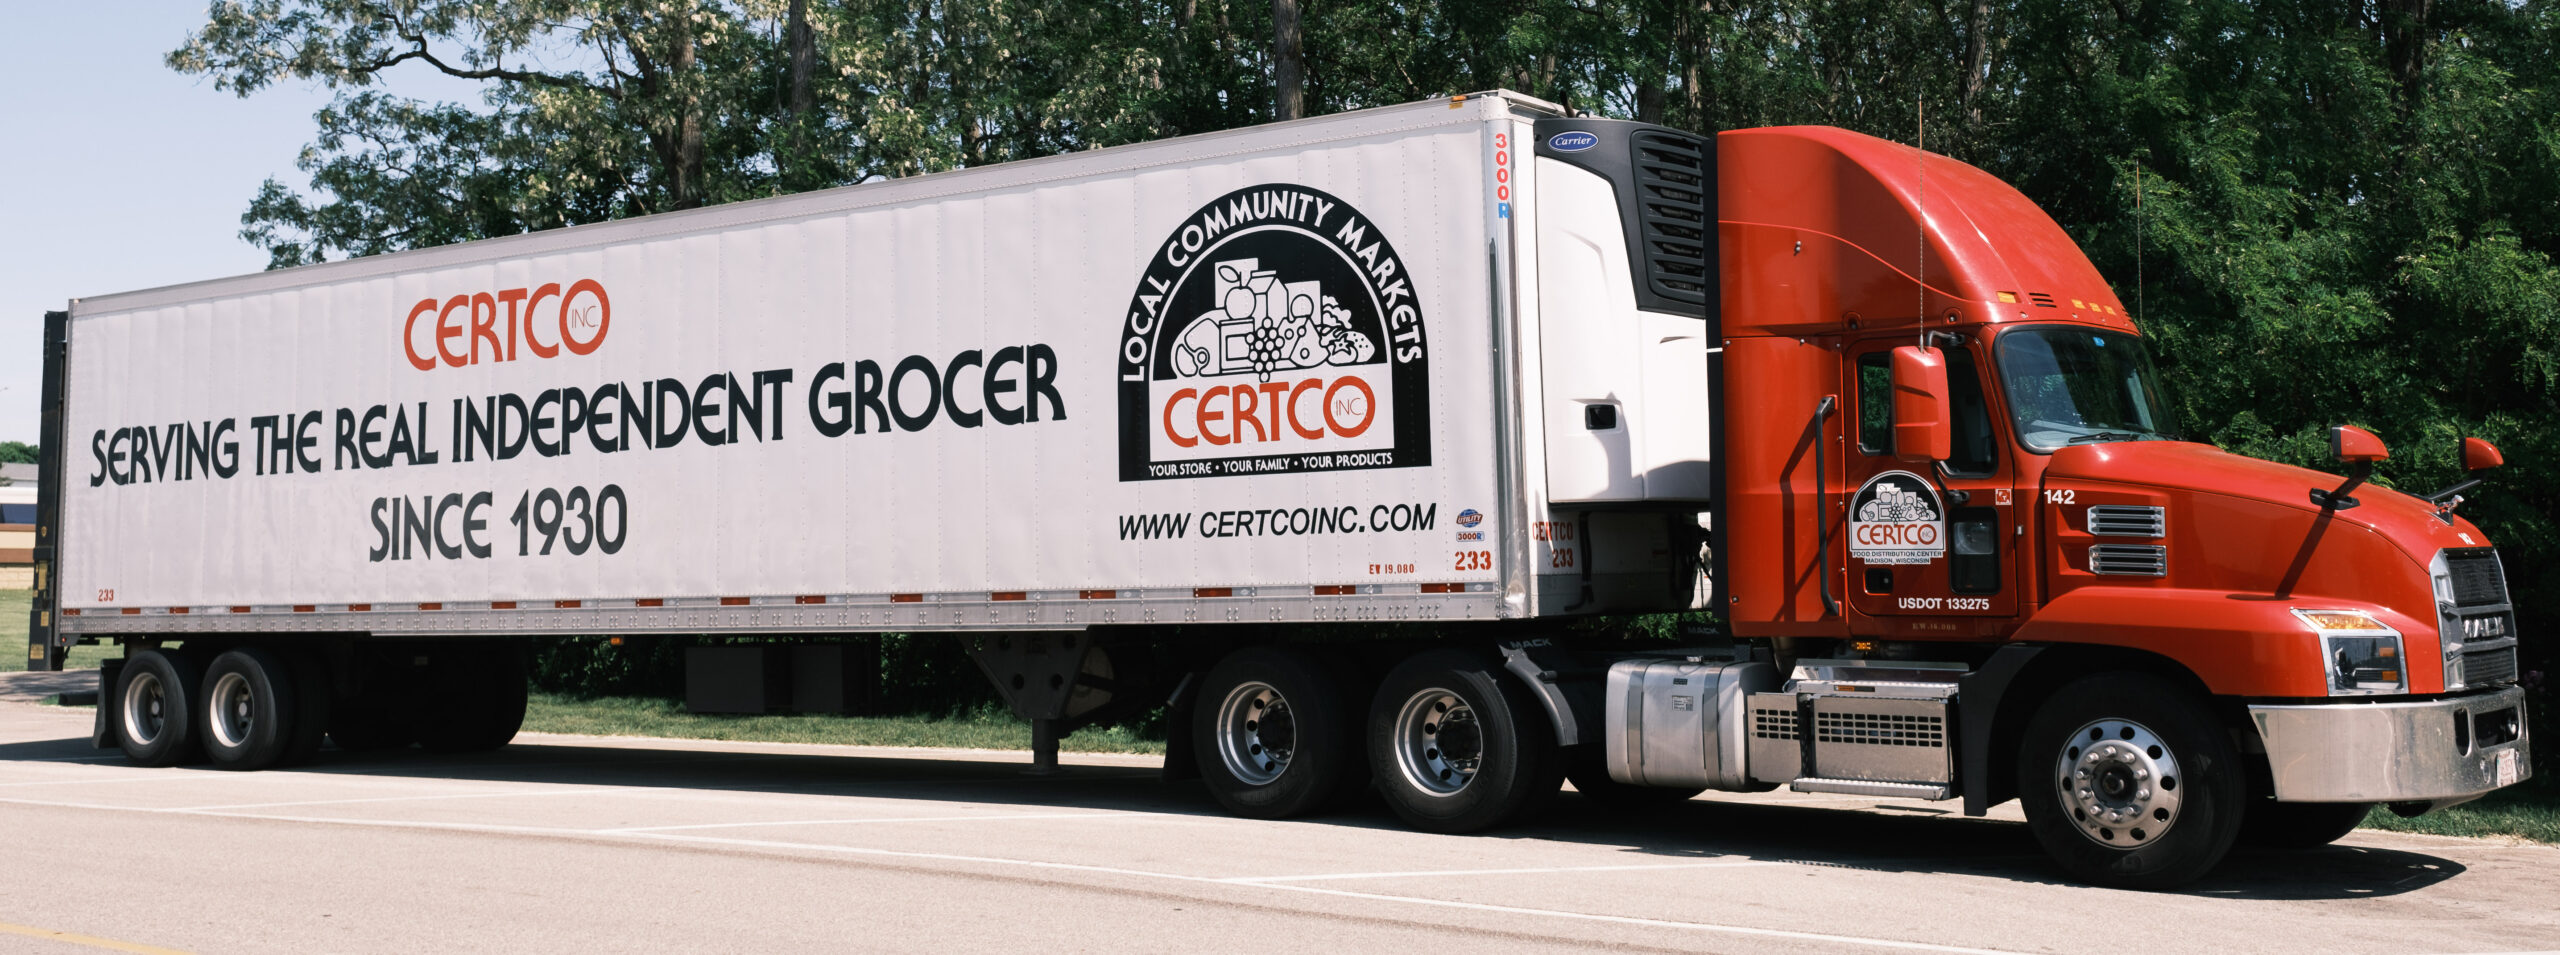 New Certco truck trailer